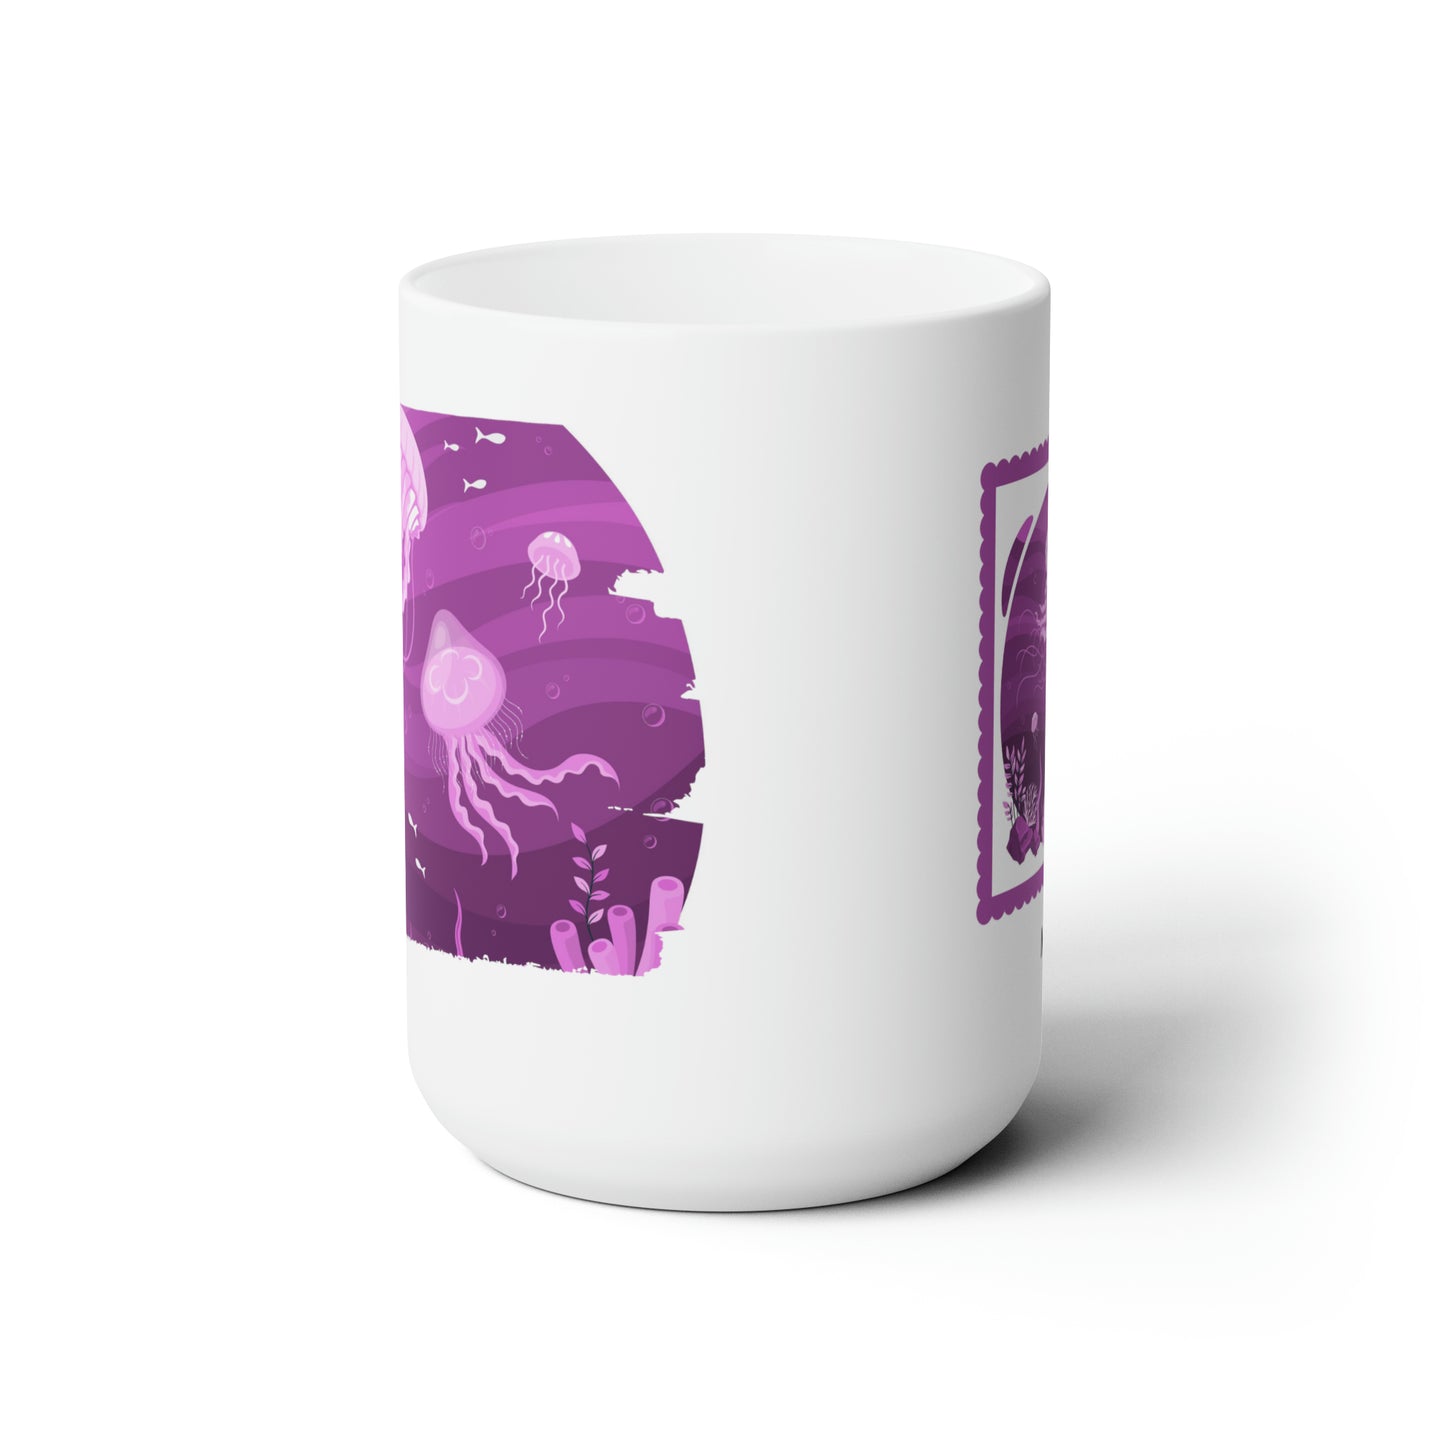 Octopus - Ceramic Mug 15oz